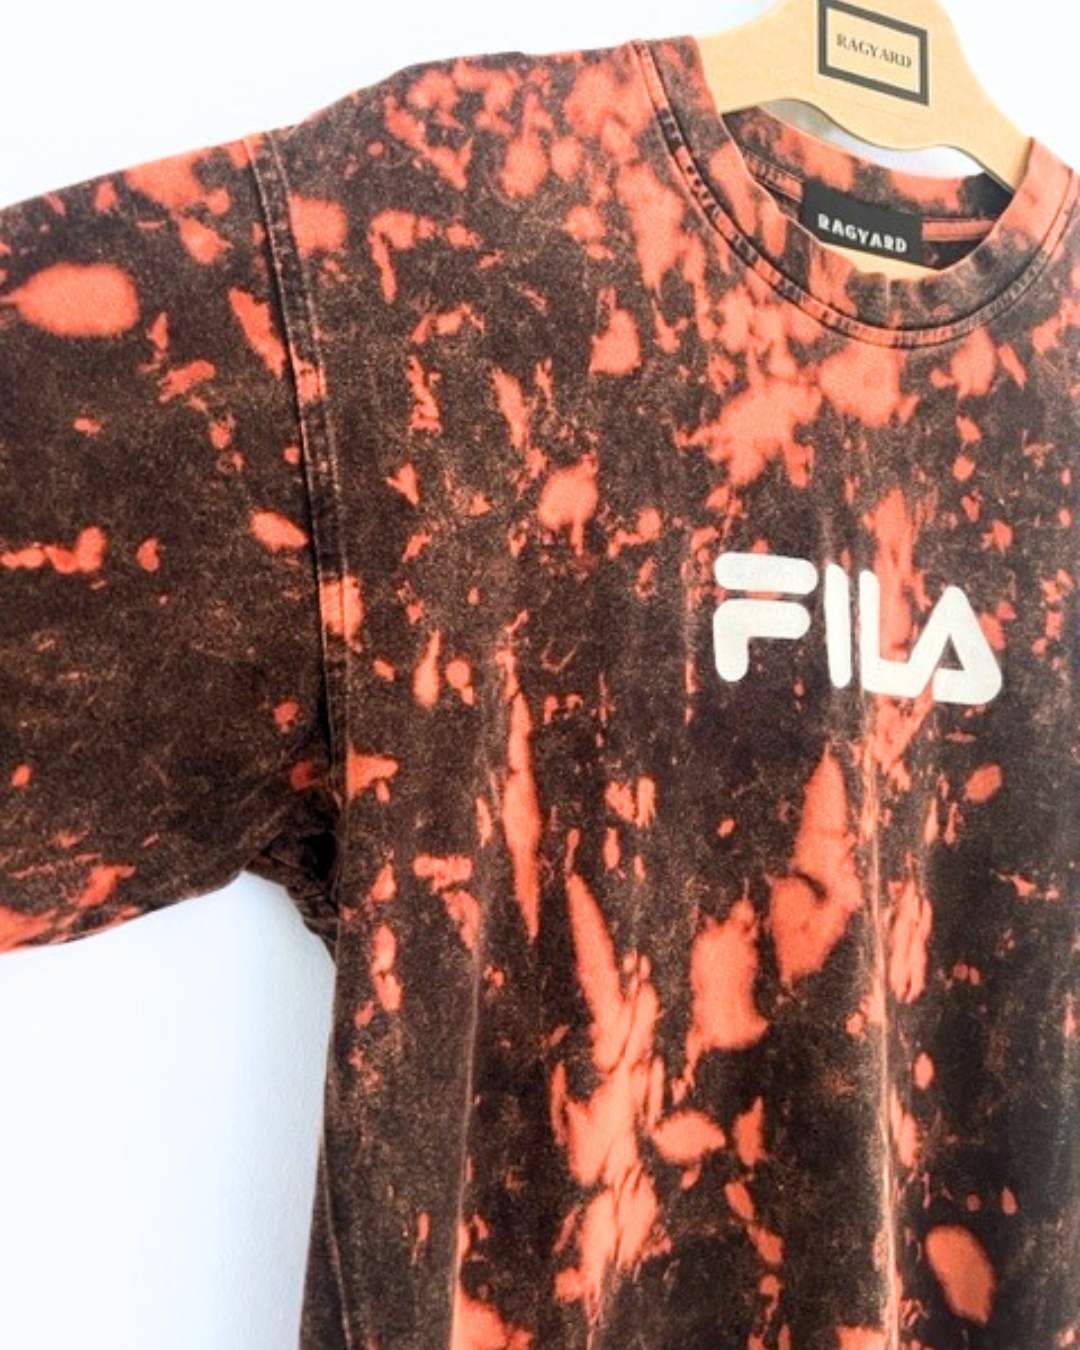 Vintage FILA Bleach sports T-shirt